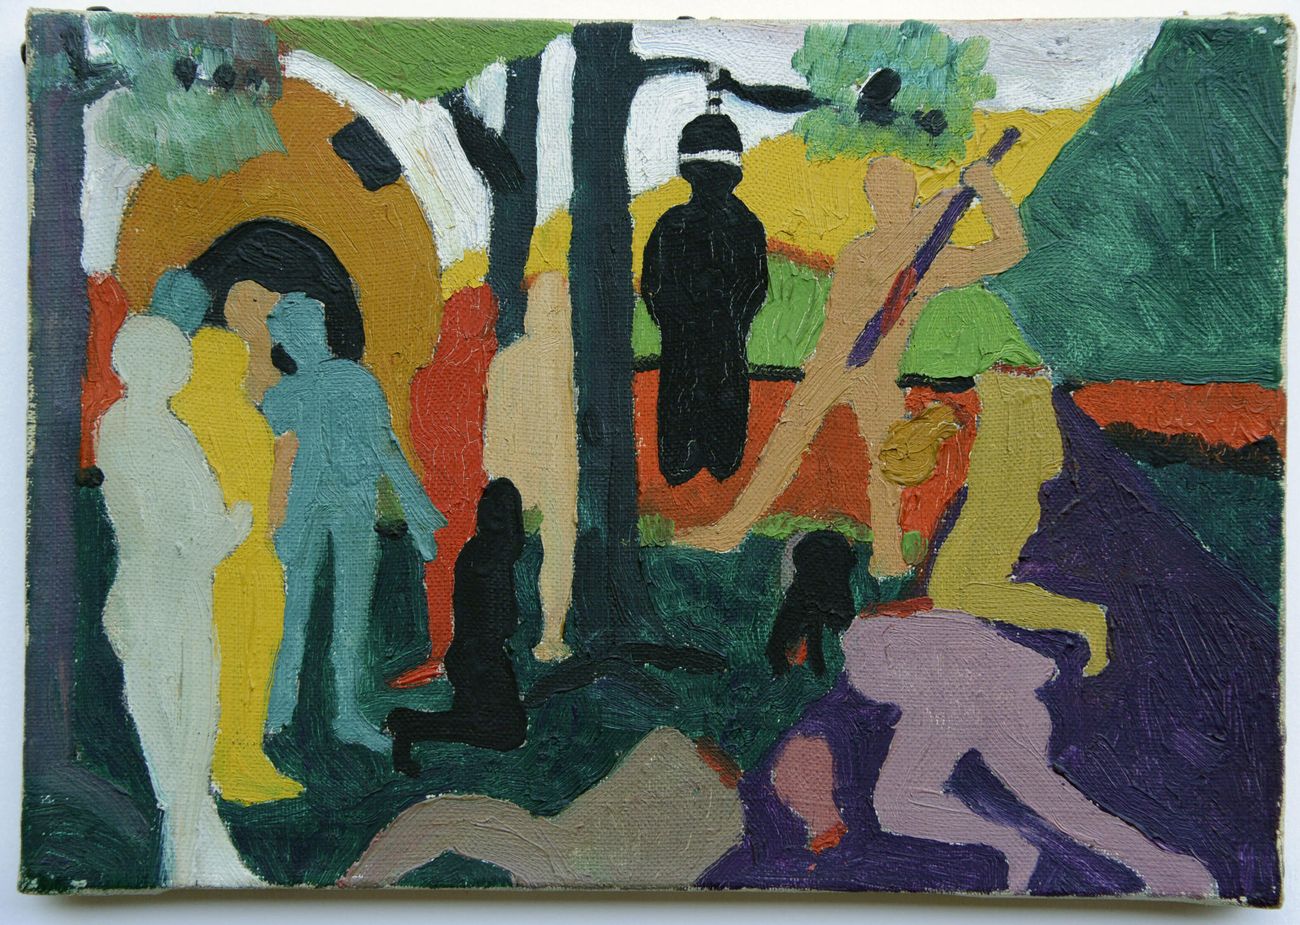 Bob Thompson, L’esecuzione, 1961. The Color Line. Installation view at Musée du Quai Branly, Parigi, 2016 © Estate of Bob Thompson. Courtesy of Michael Rosenfeld Gallery LLC, New York